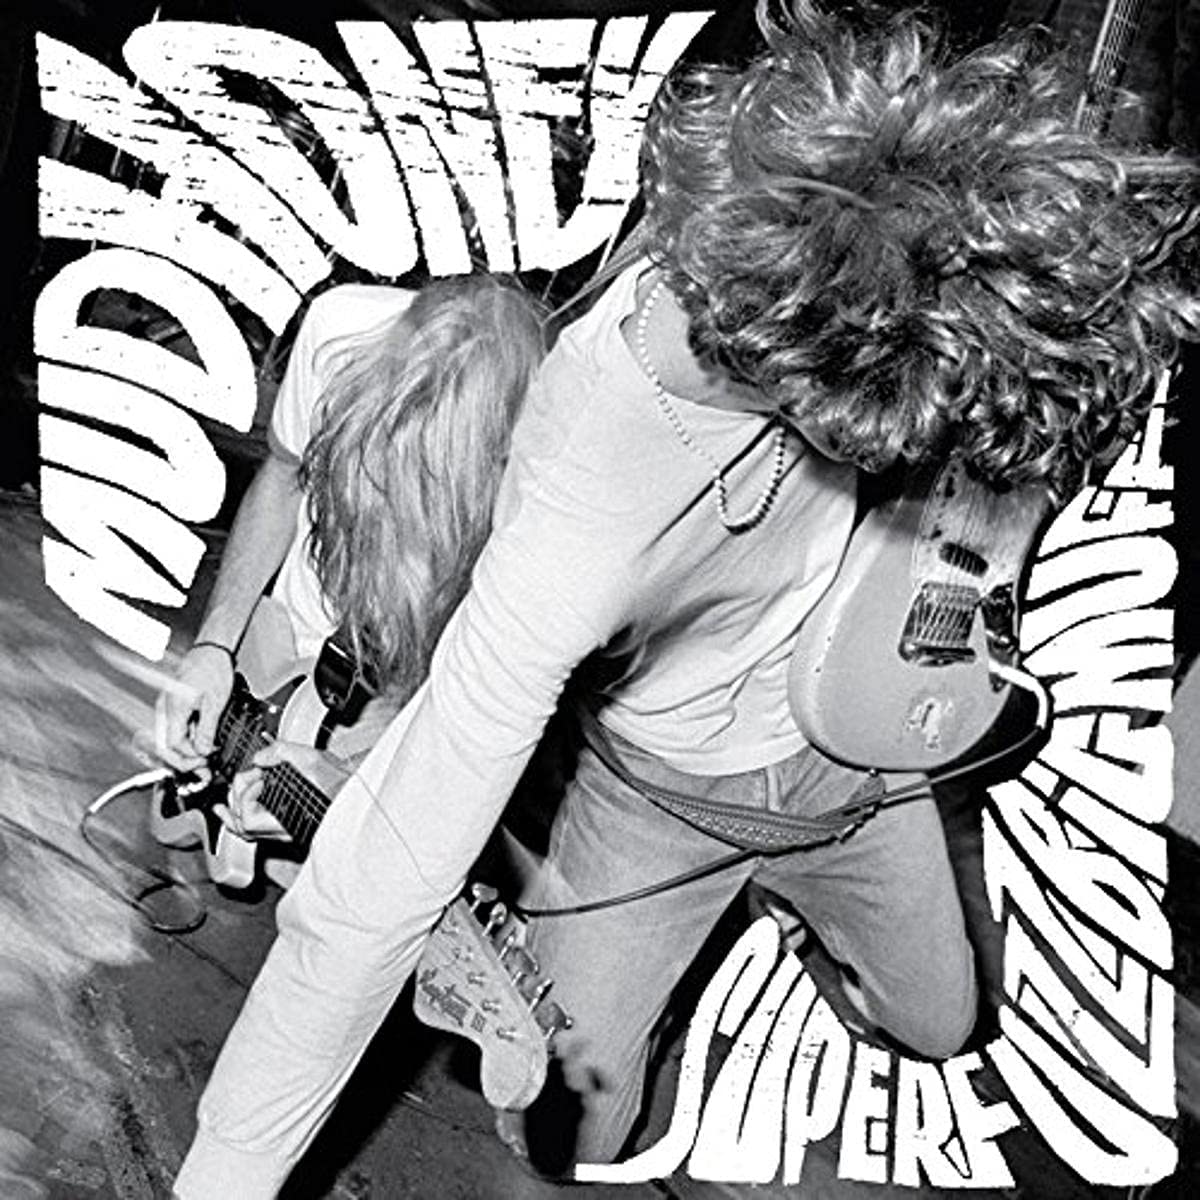 Mudhoney - Superfuzz Bigmuff (Vinyl 12" EP)